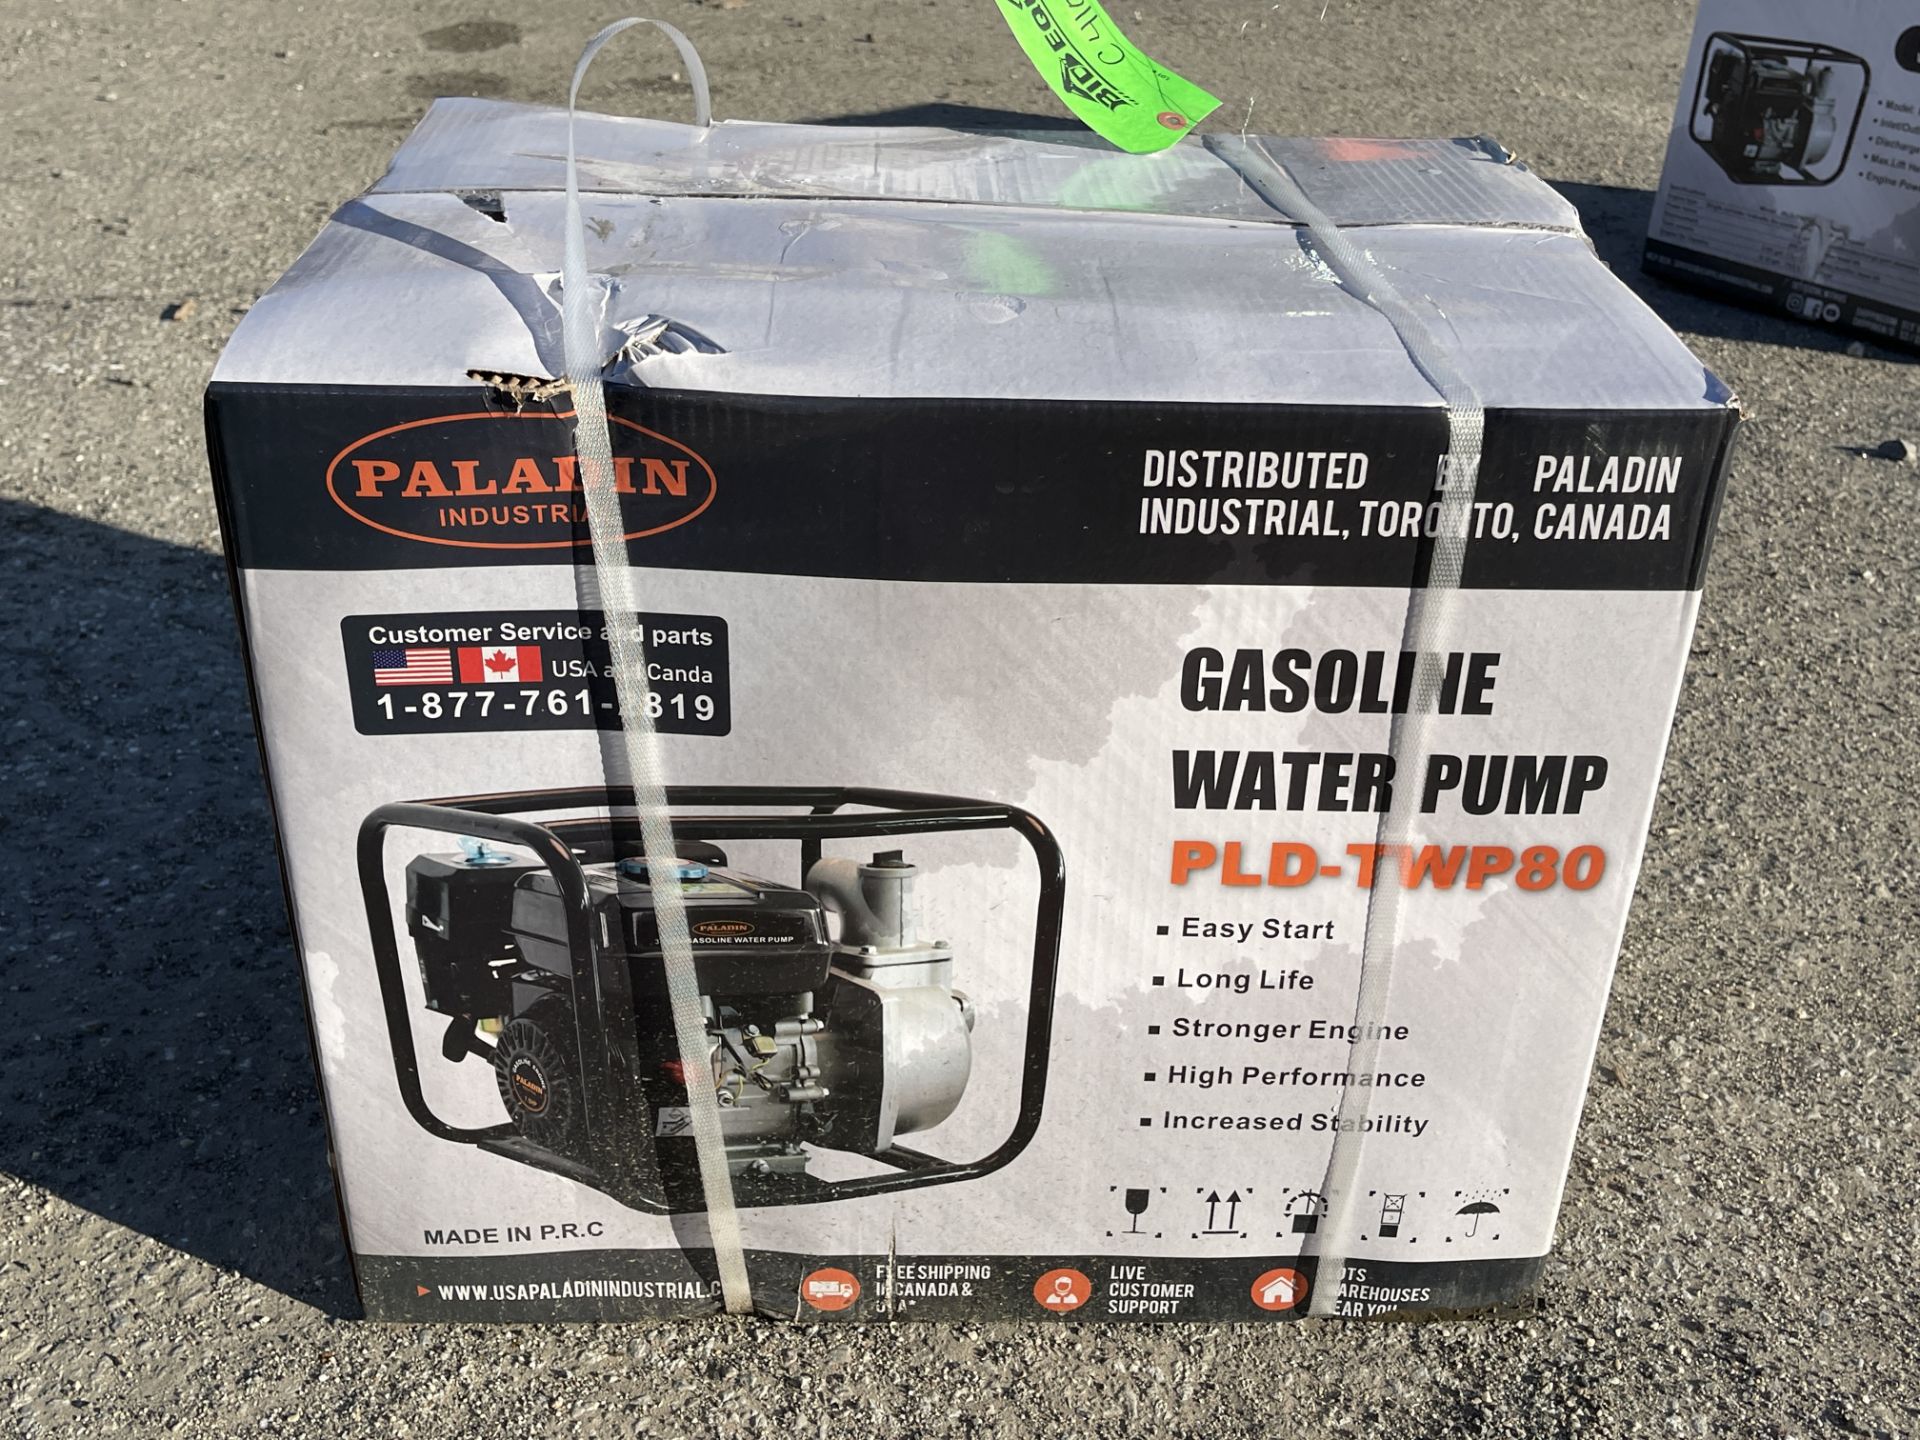 Paladin PLD-TWP80 Gasoline Water Pump (C410E) - Image 3 of 4